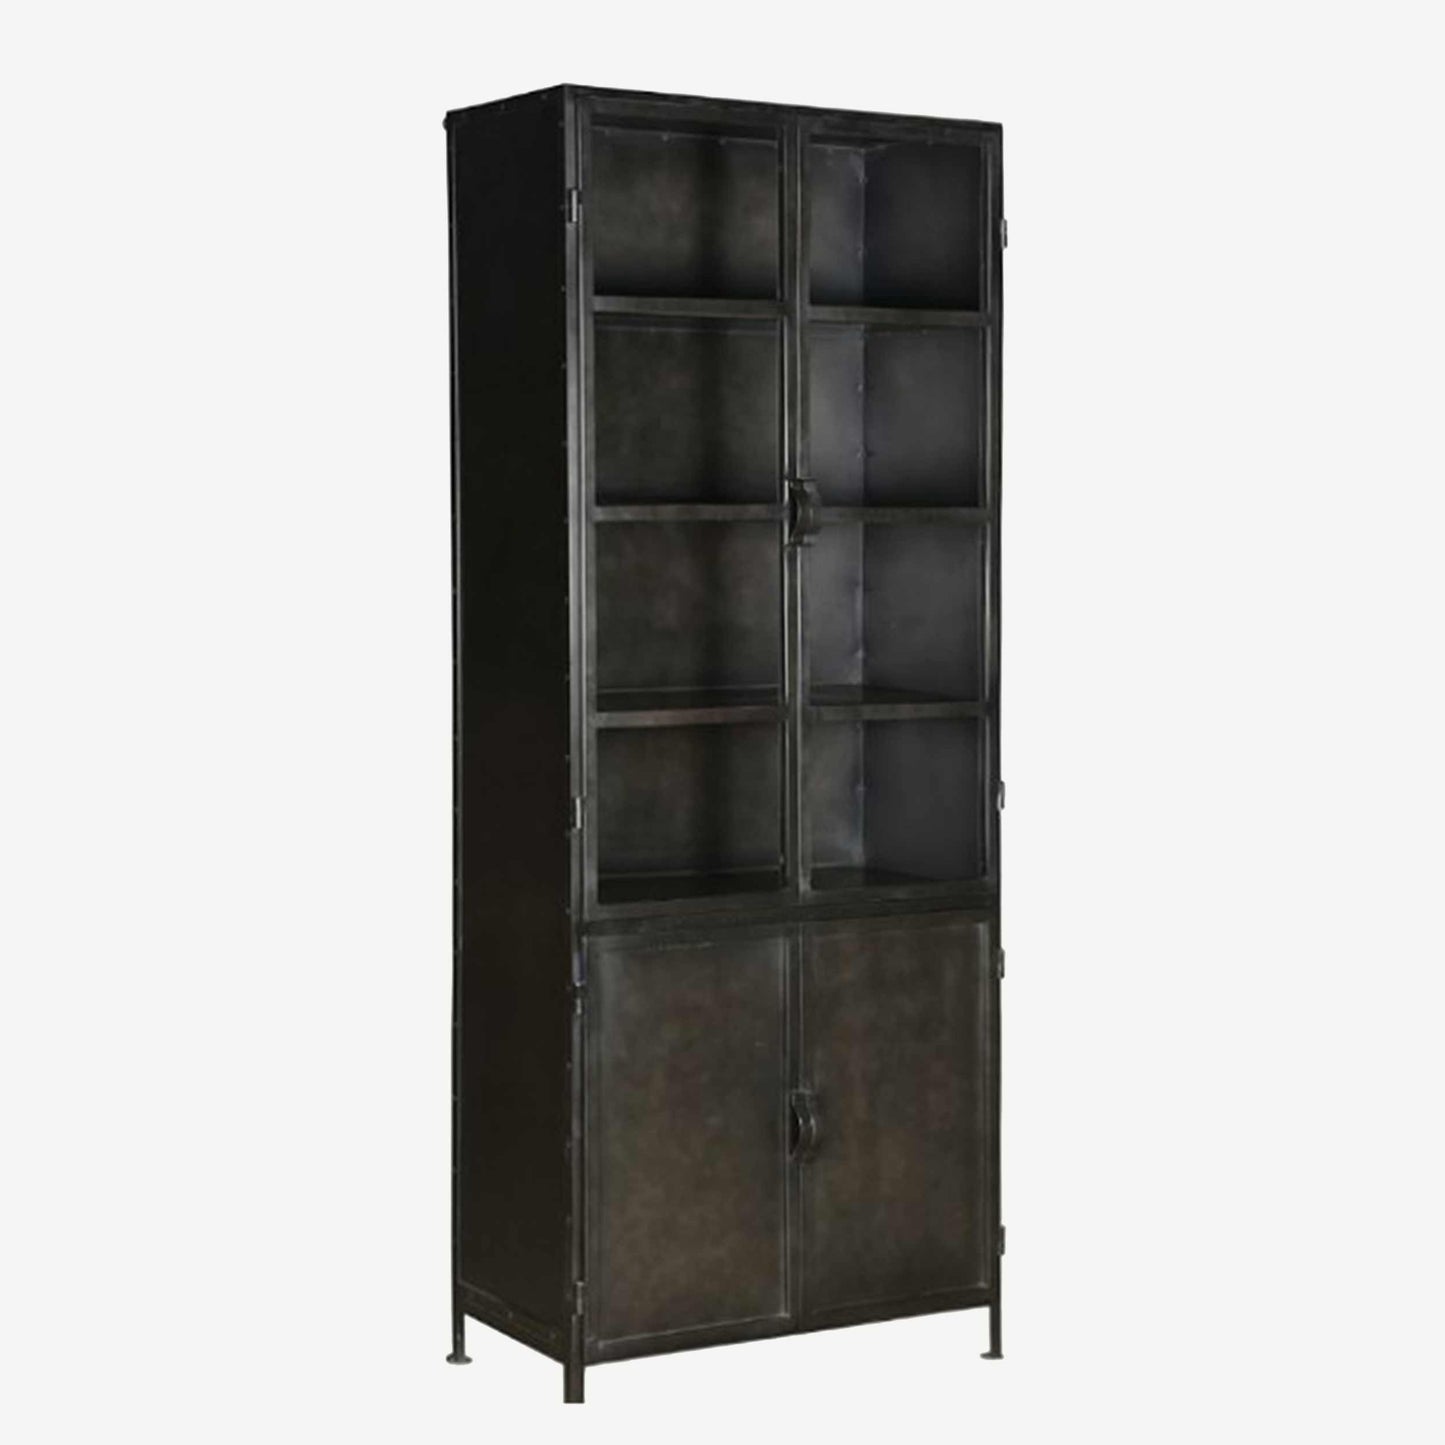 The Inis Tall Black Metal Dresser